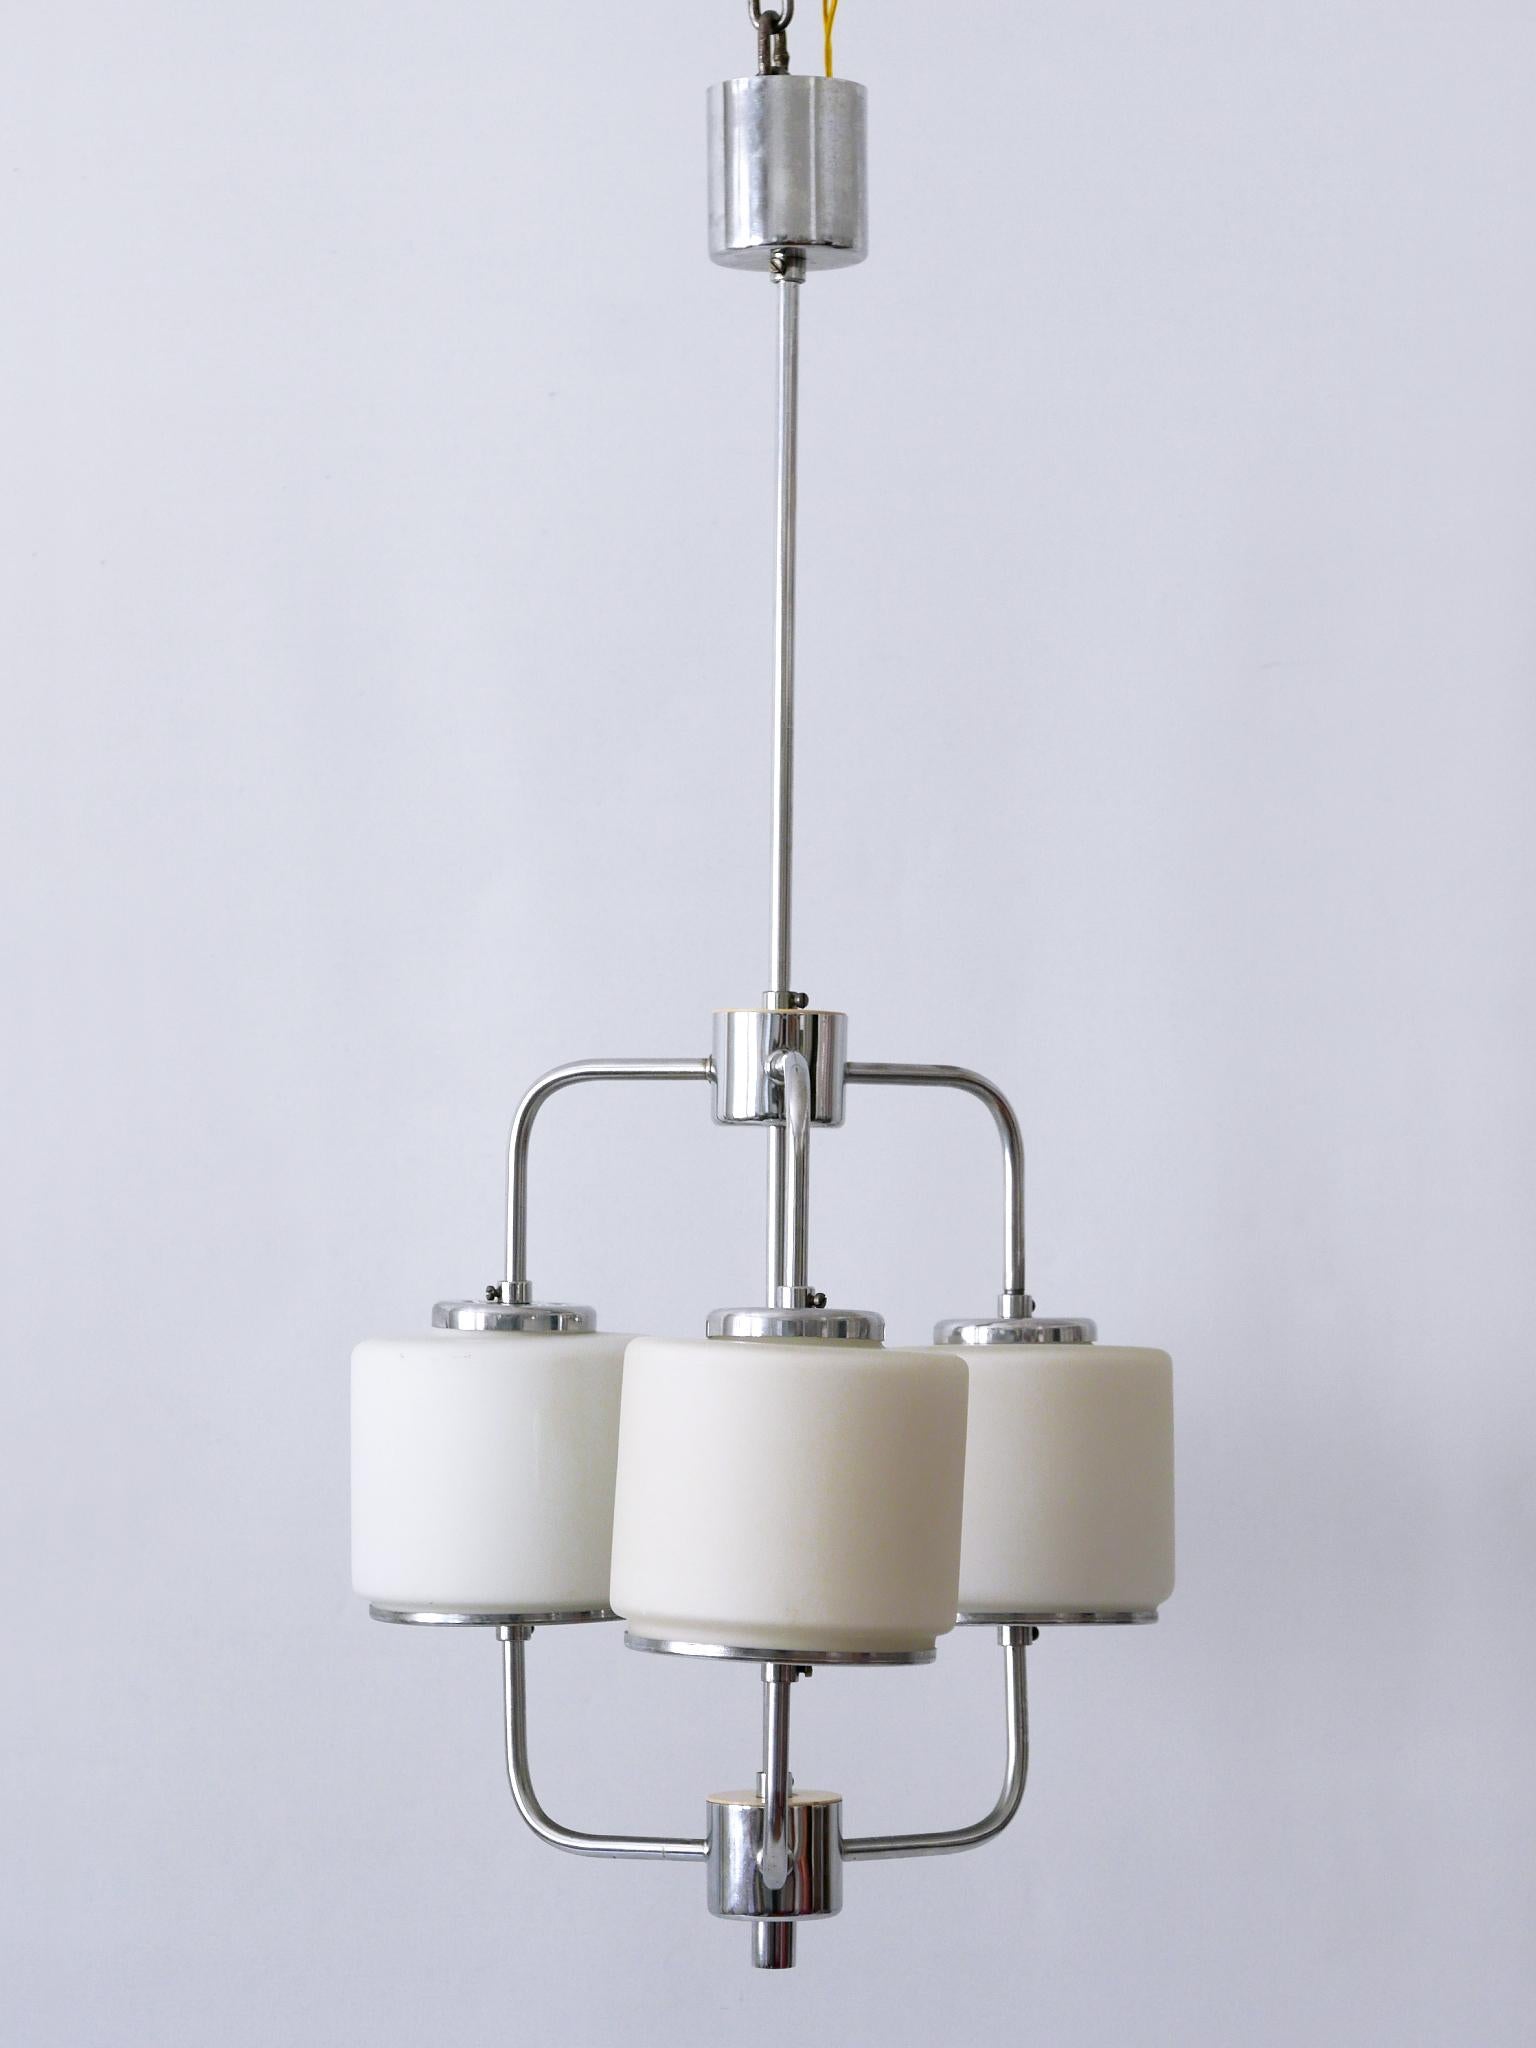 Rare & Elegant Art Deco or Bauhaus Chandelier or Pendant Lamp Germany 1930s For Sale 4